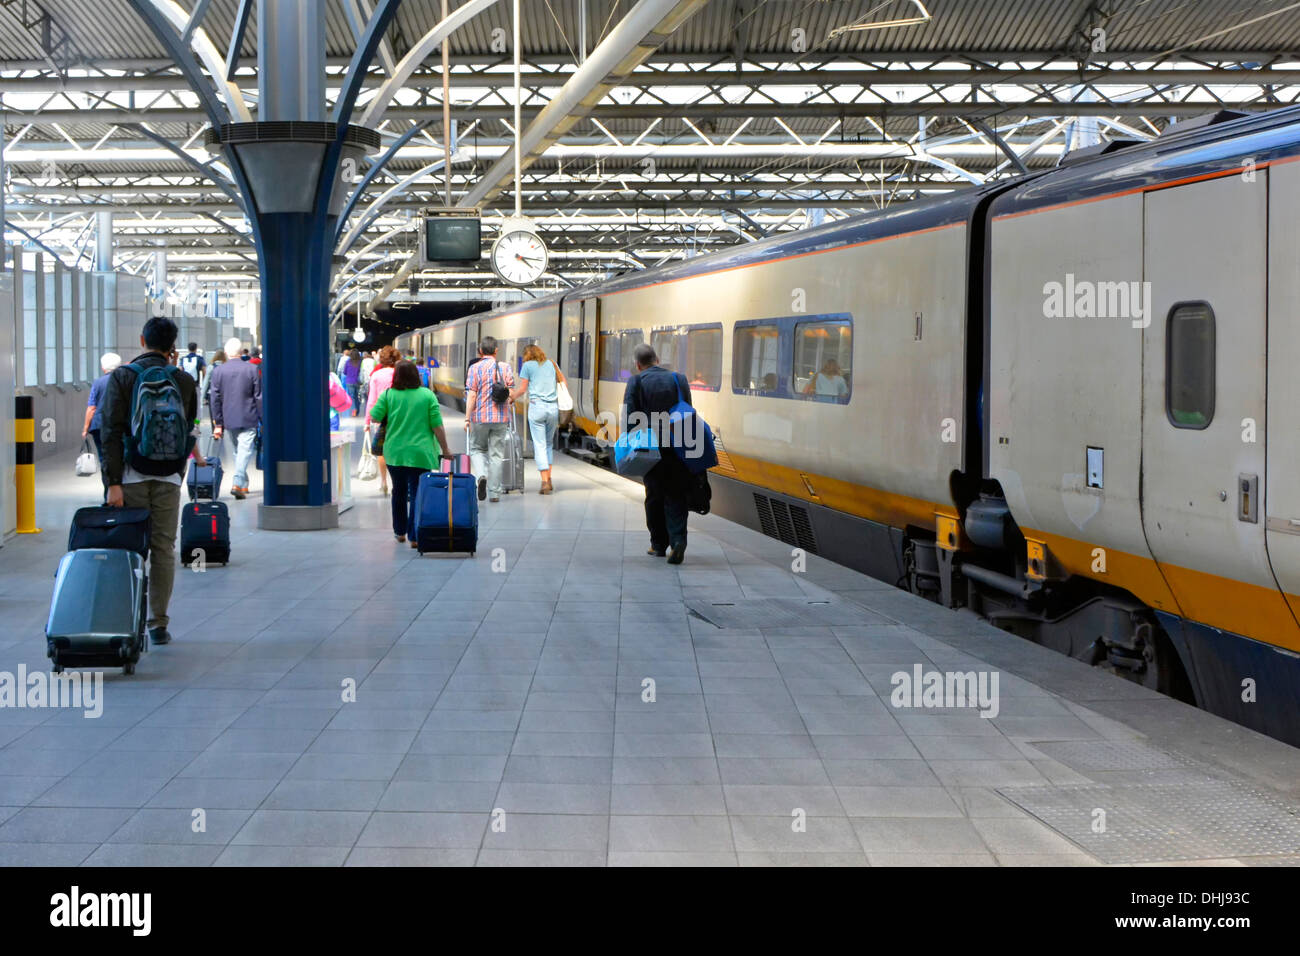 Brüssel Midi Zuid Bahnsteig Fahrgäste mit Koffer Gepäck verlassen EuroStar  Zug von London Stockfotografie - Alamy